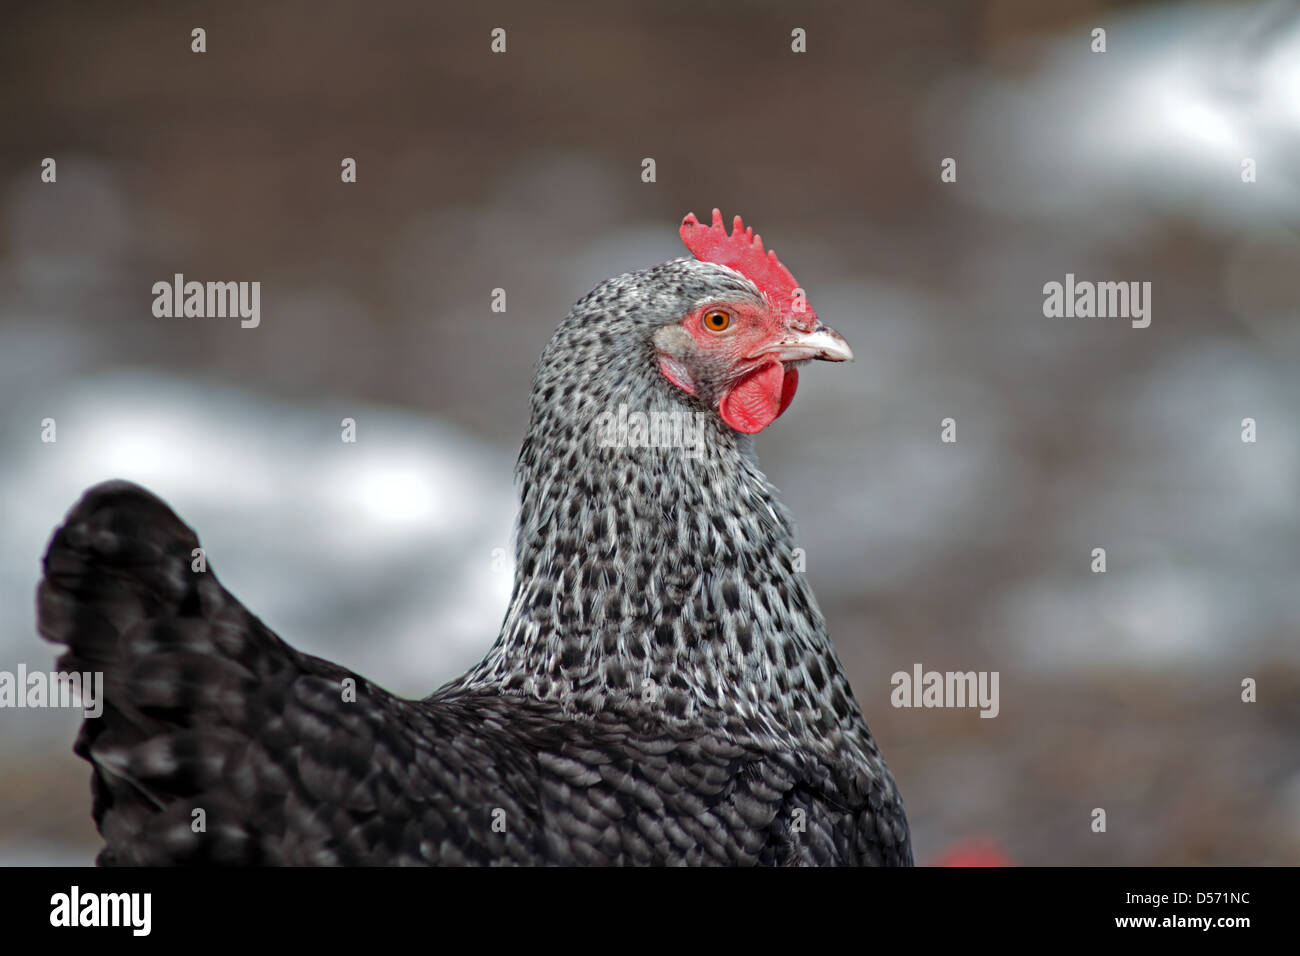 Speckledy hybrid chicken Stock Photo